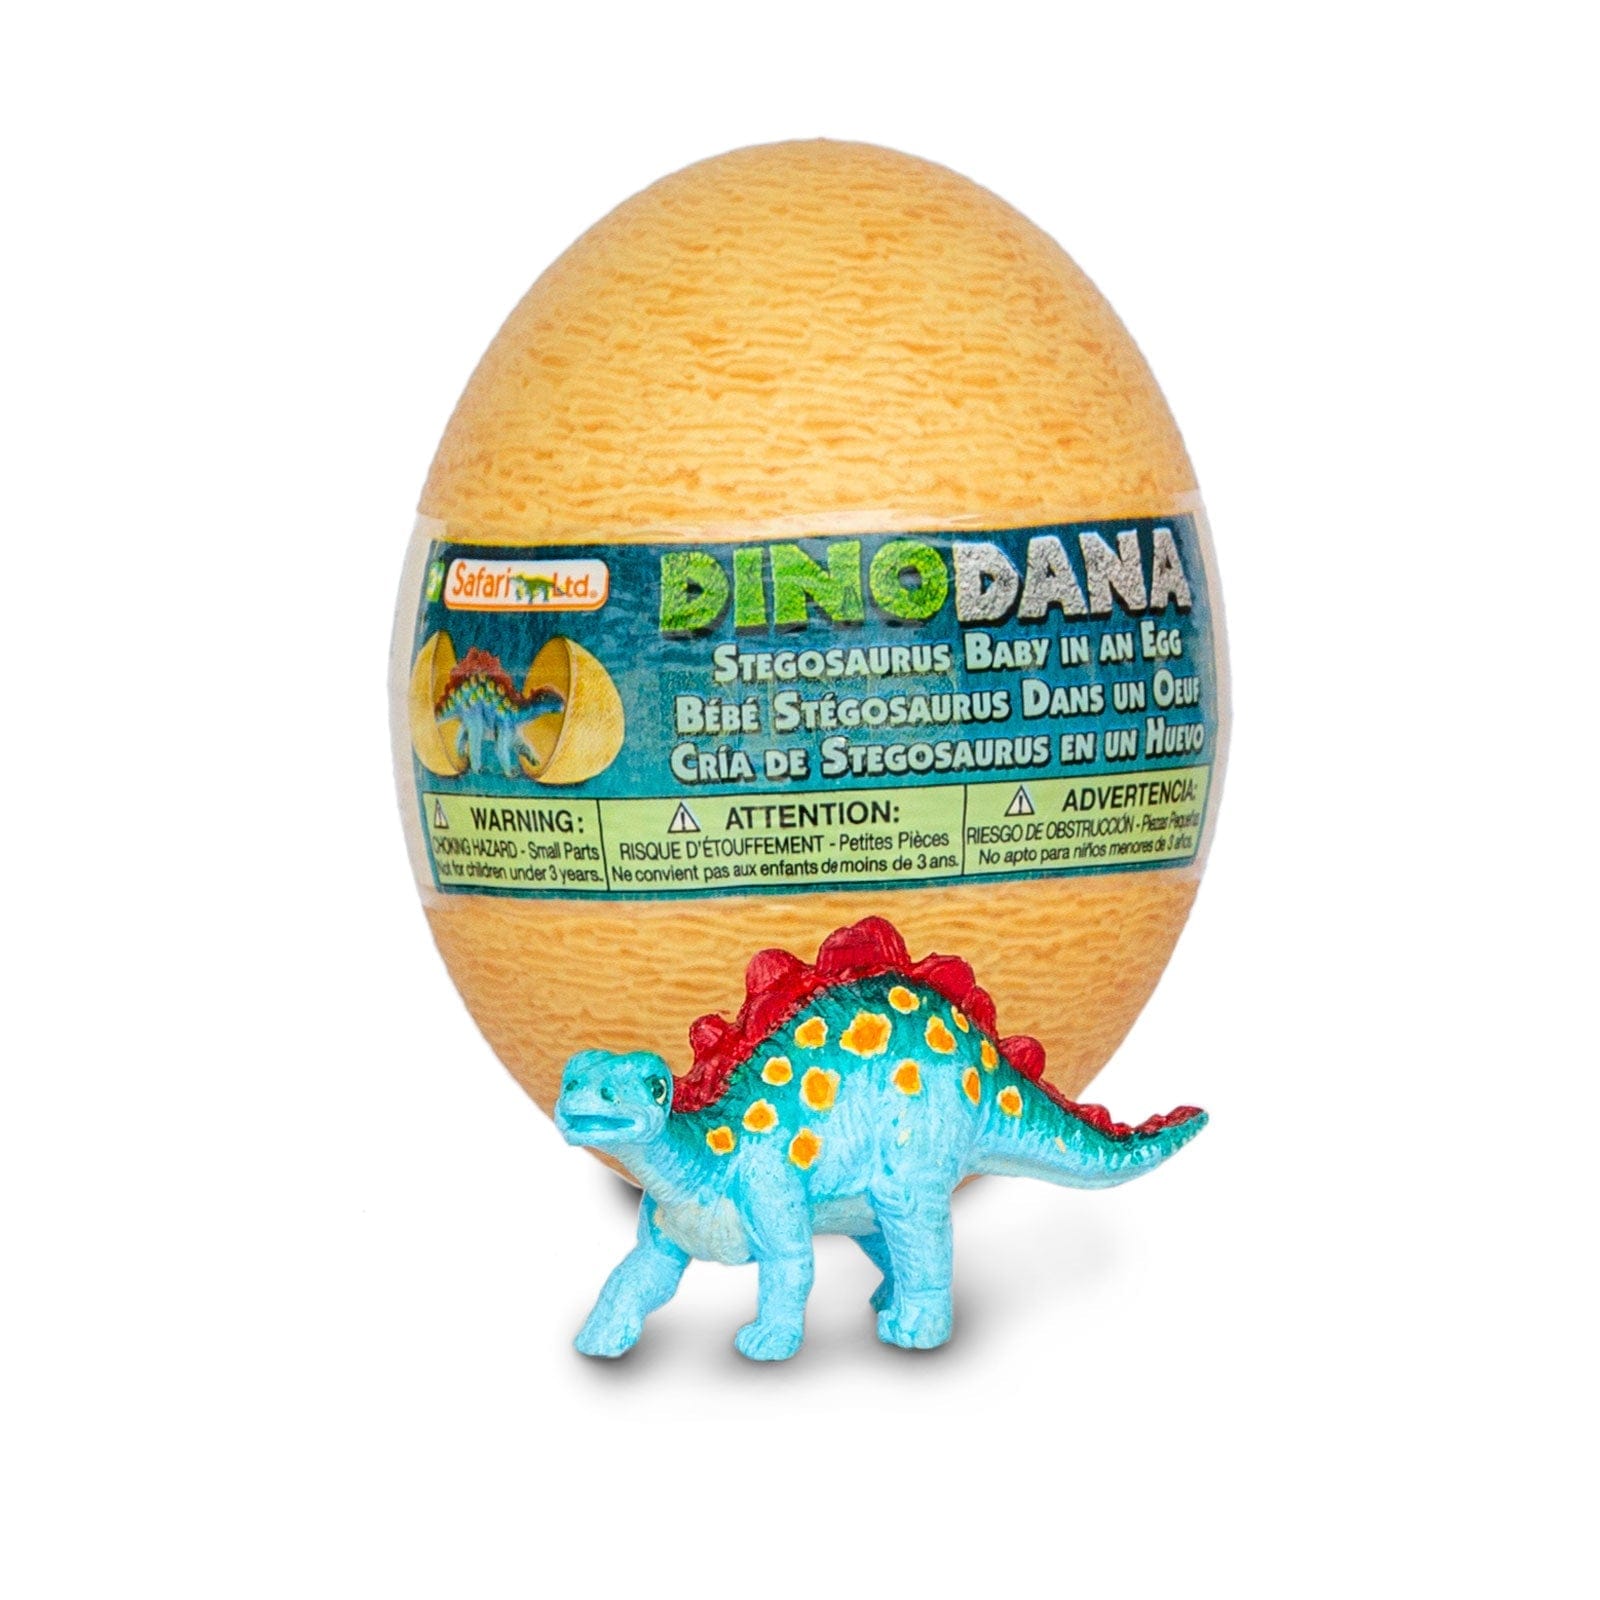 Pichintun Stegosaurus Baby with Egg Dino Dana Coleccionable